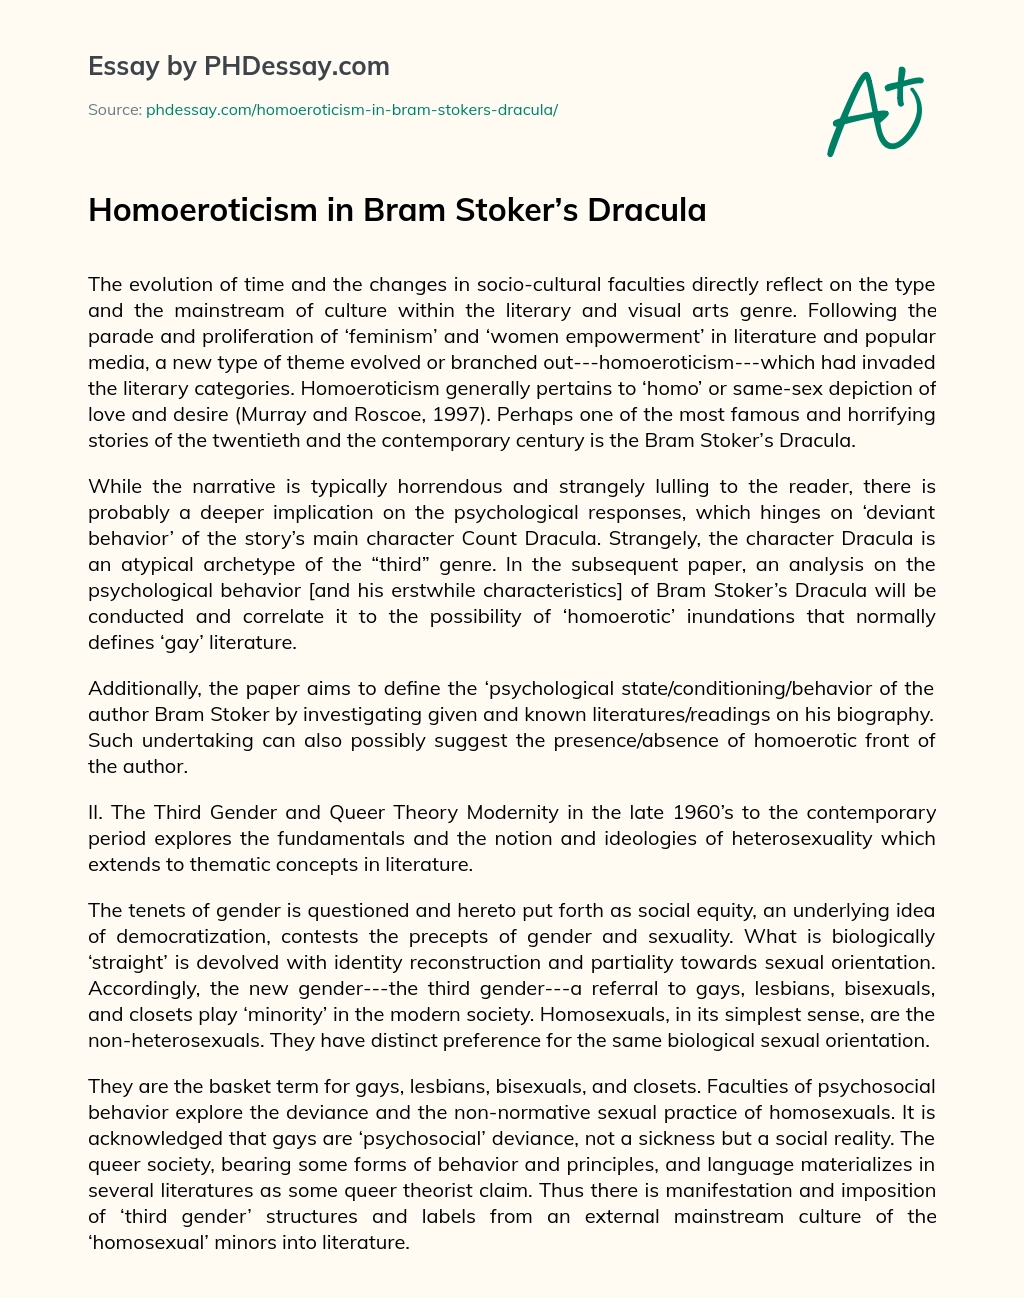 Homoeroticism in Bram Stoker’s Dracula essay